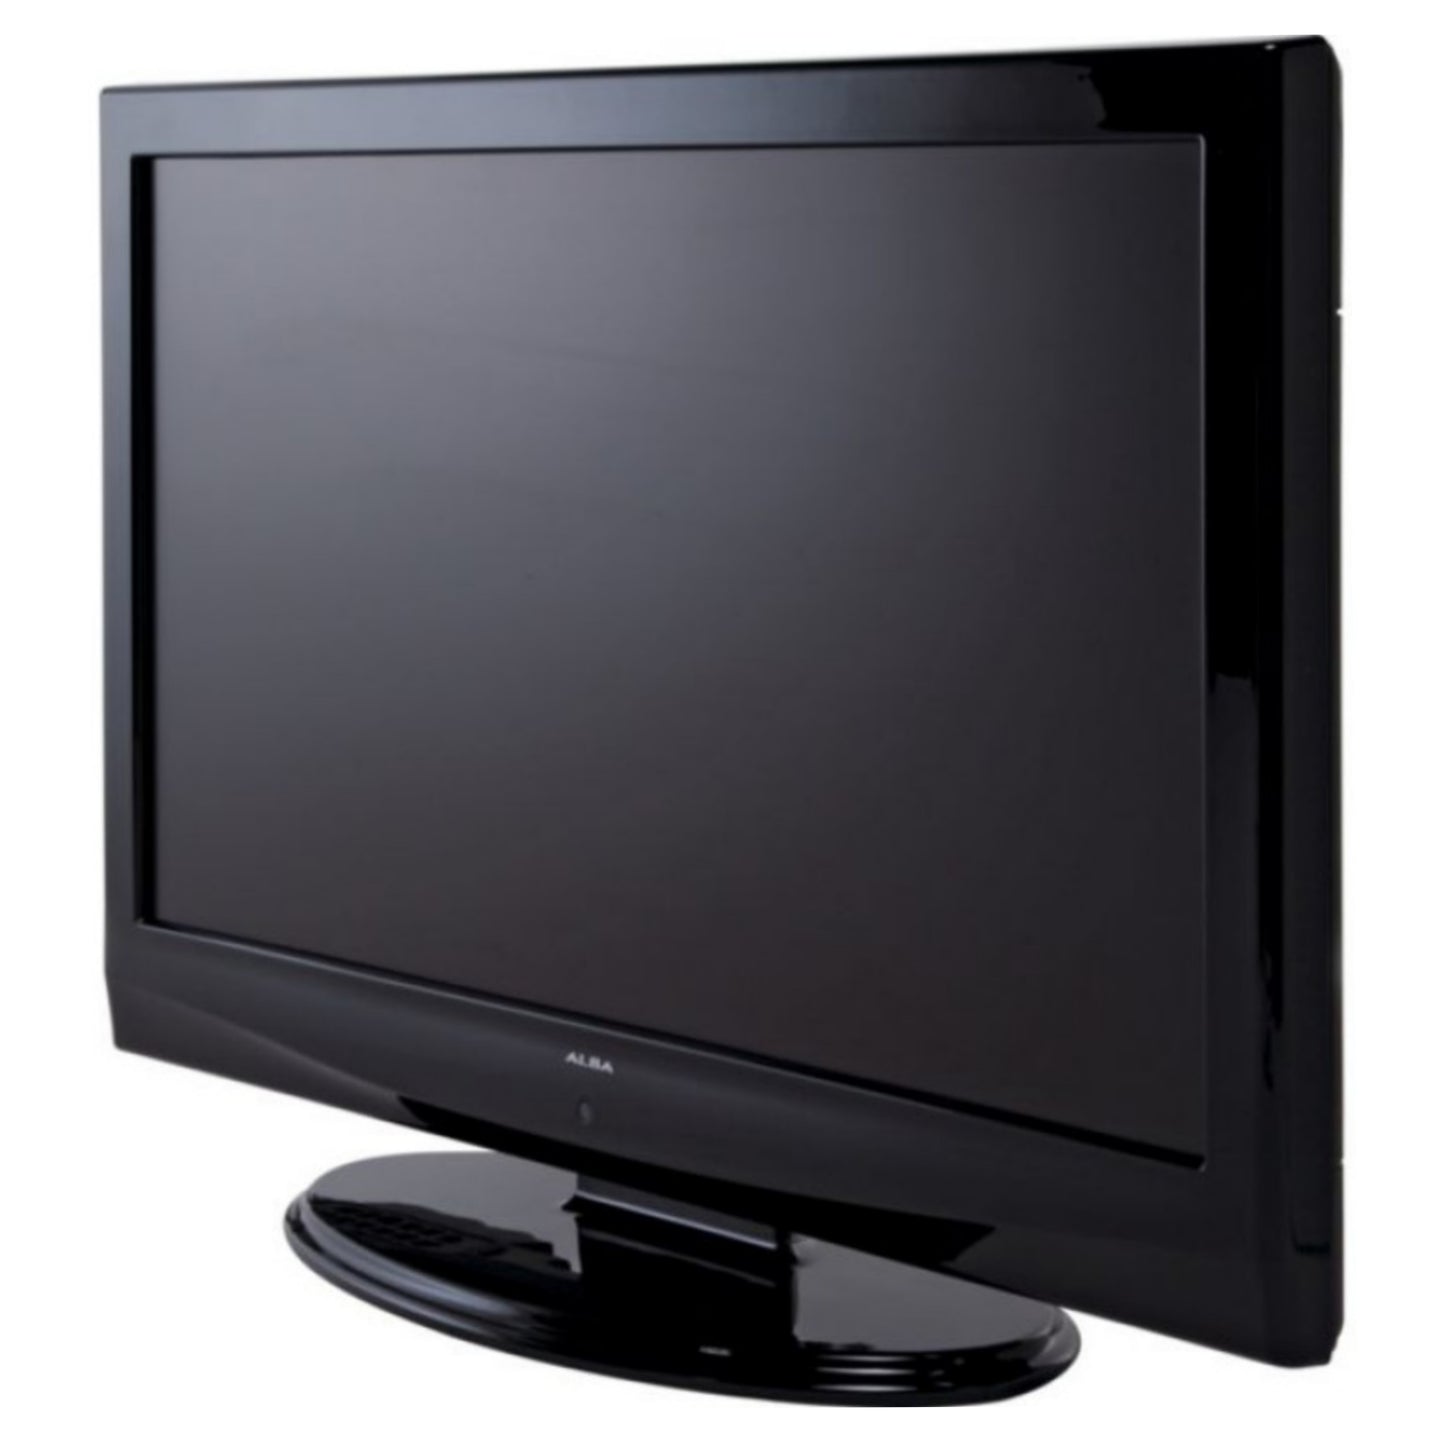 32 inch Alba LCD TV LCD32880HDF - London Used